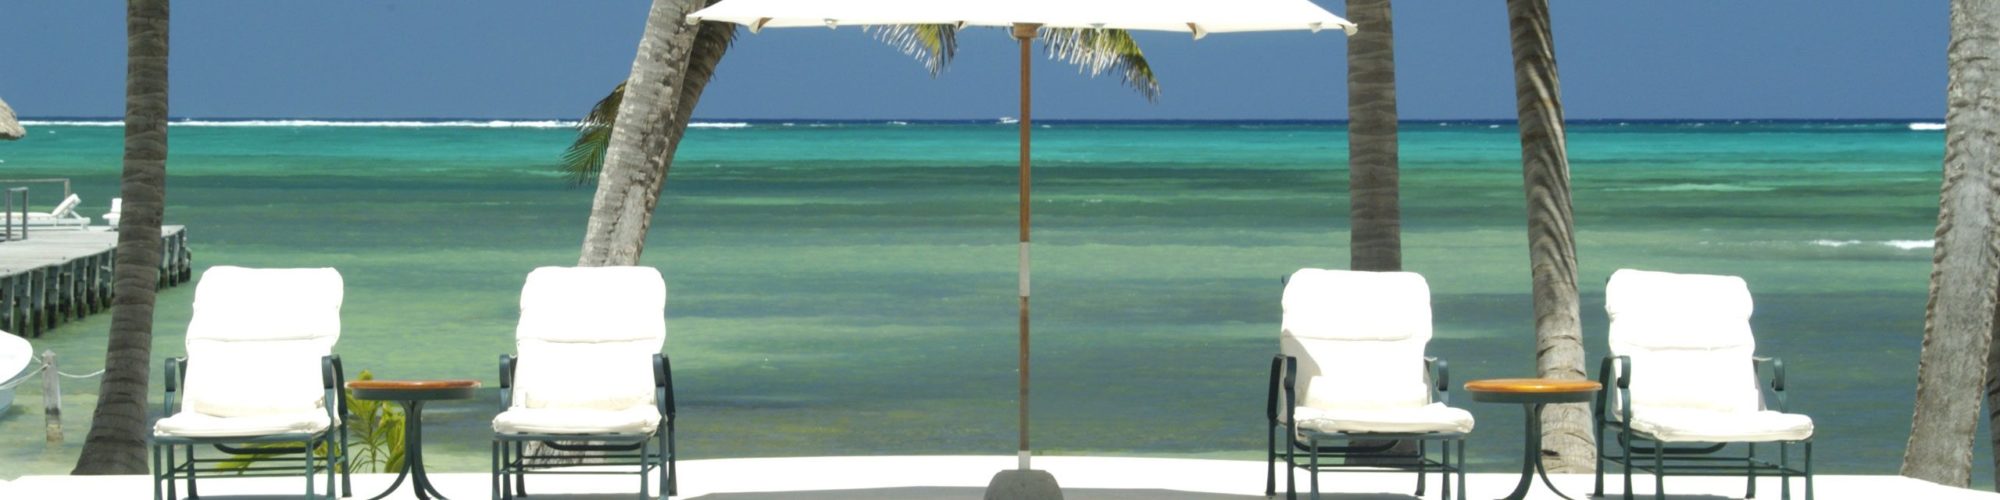 Belize travel agents packages deals